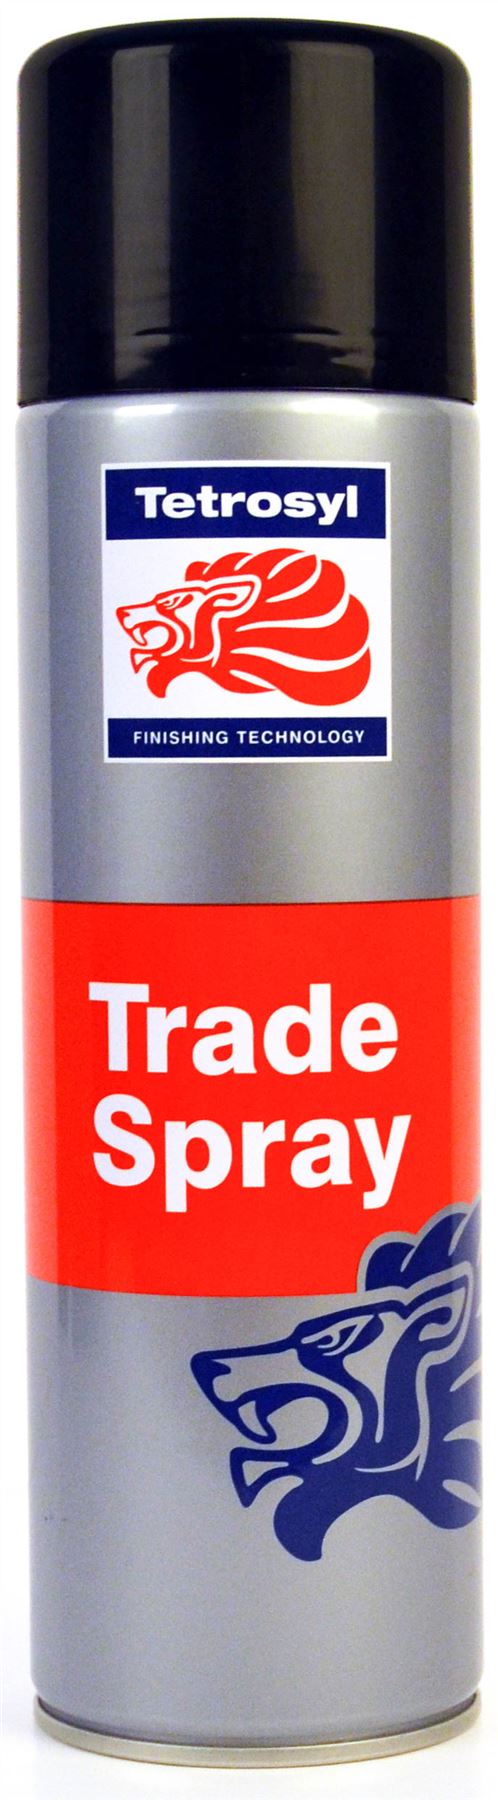 Tetrosyl Trade Spray Paint Matt Black 500ml